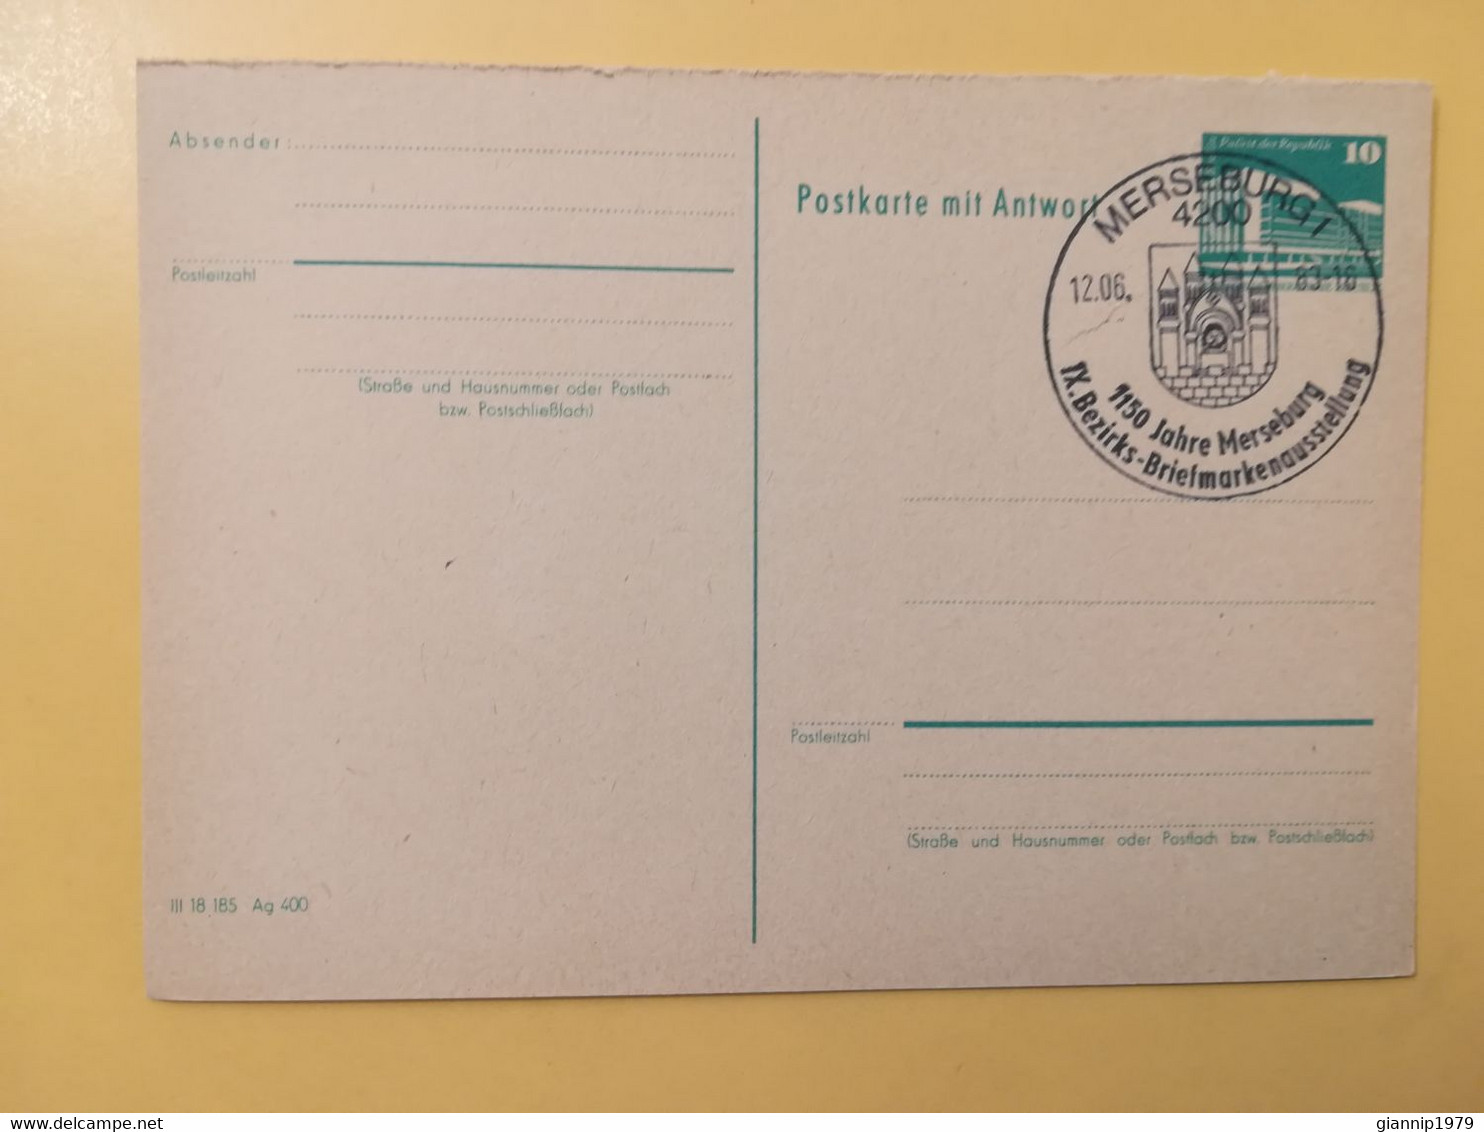 1983 INTERO CARTOLINA POSTALE POSTCARDS FDC GERMANIA DEUTSCHE DDR   OBLITERE' MERSEBURG 1 - Postcards - Mint